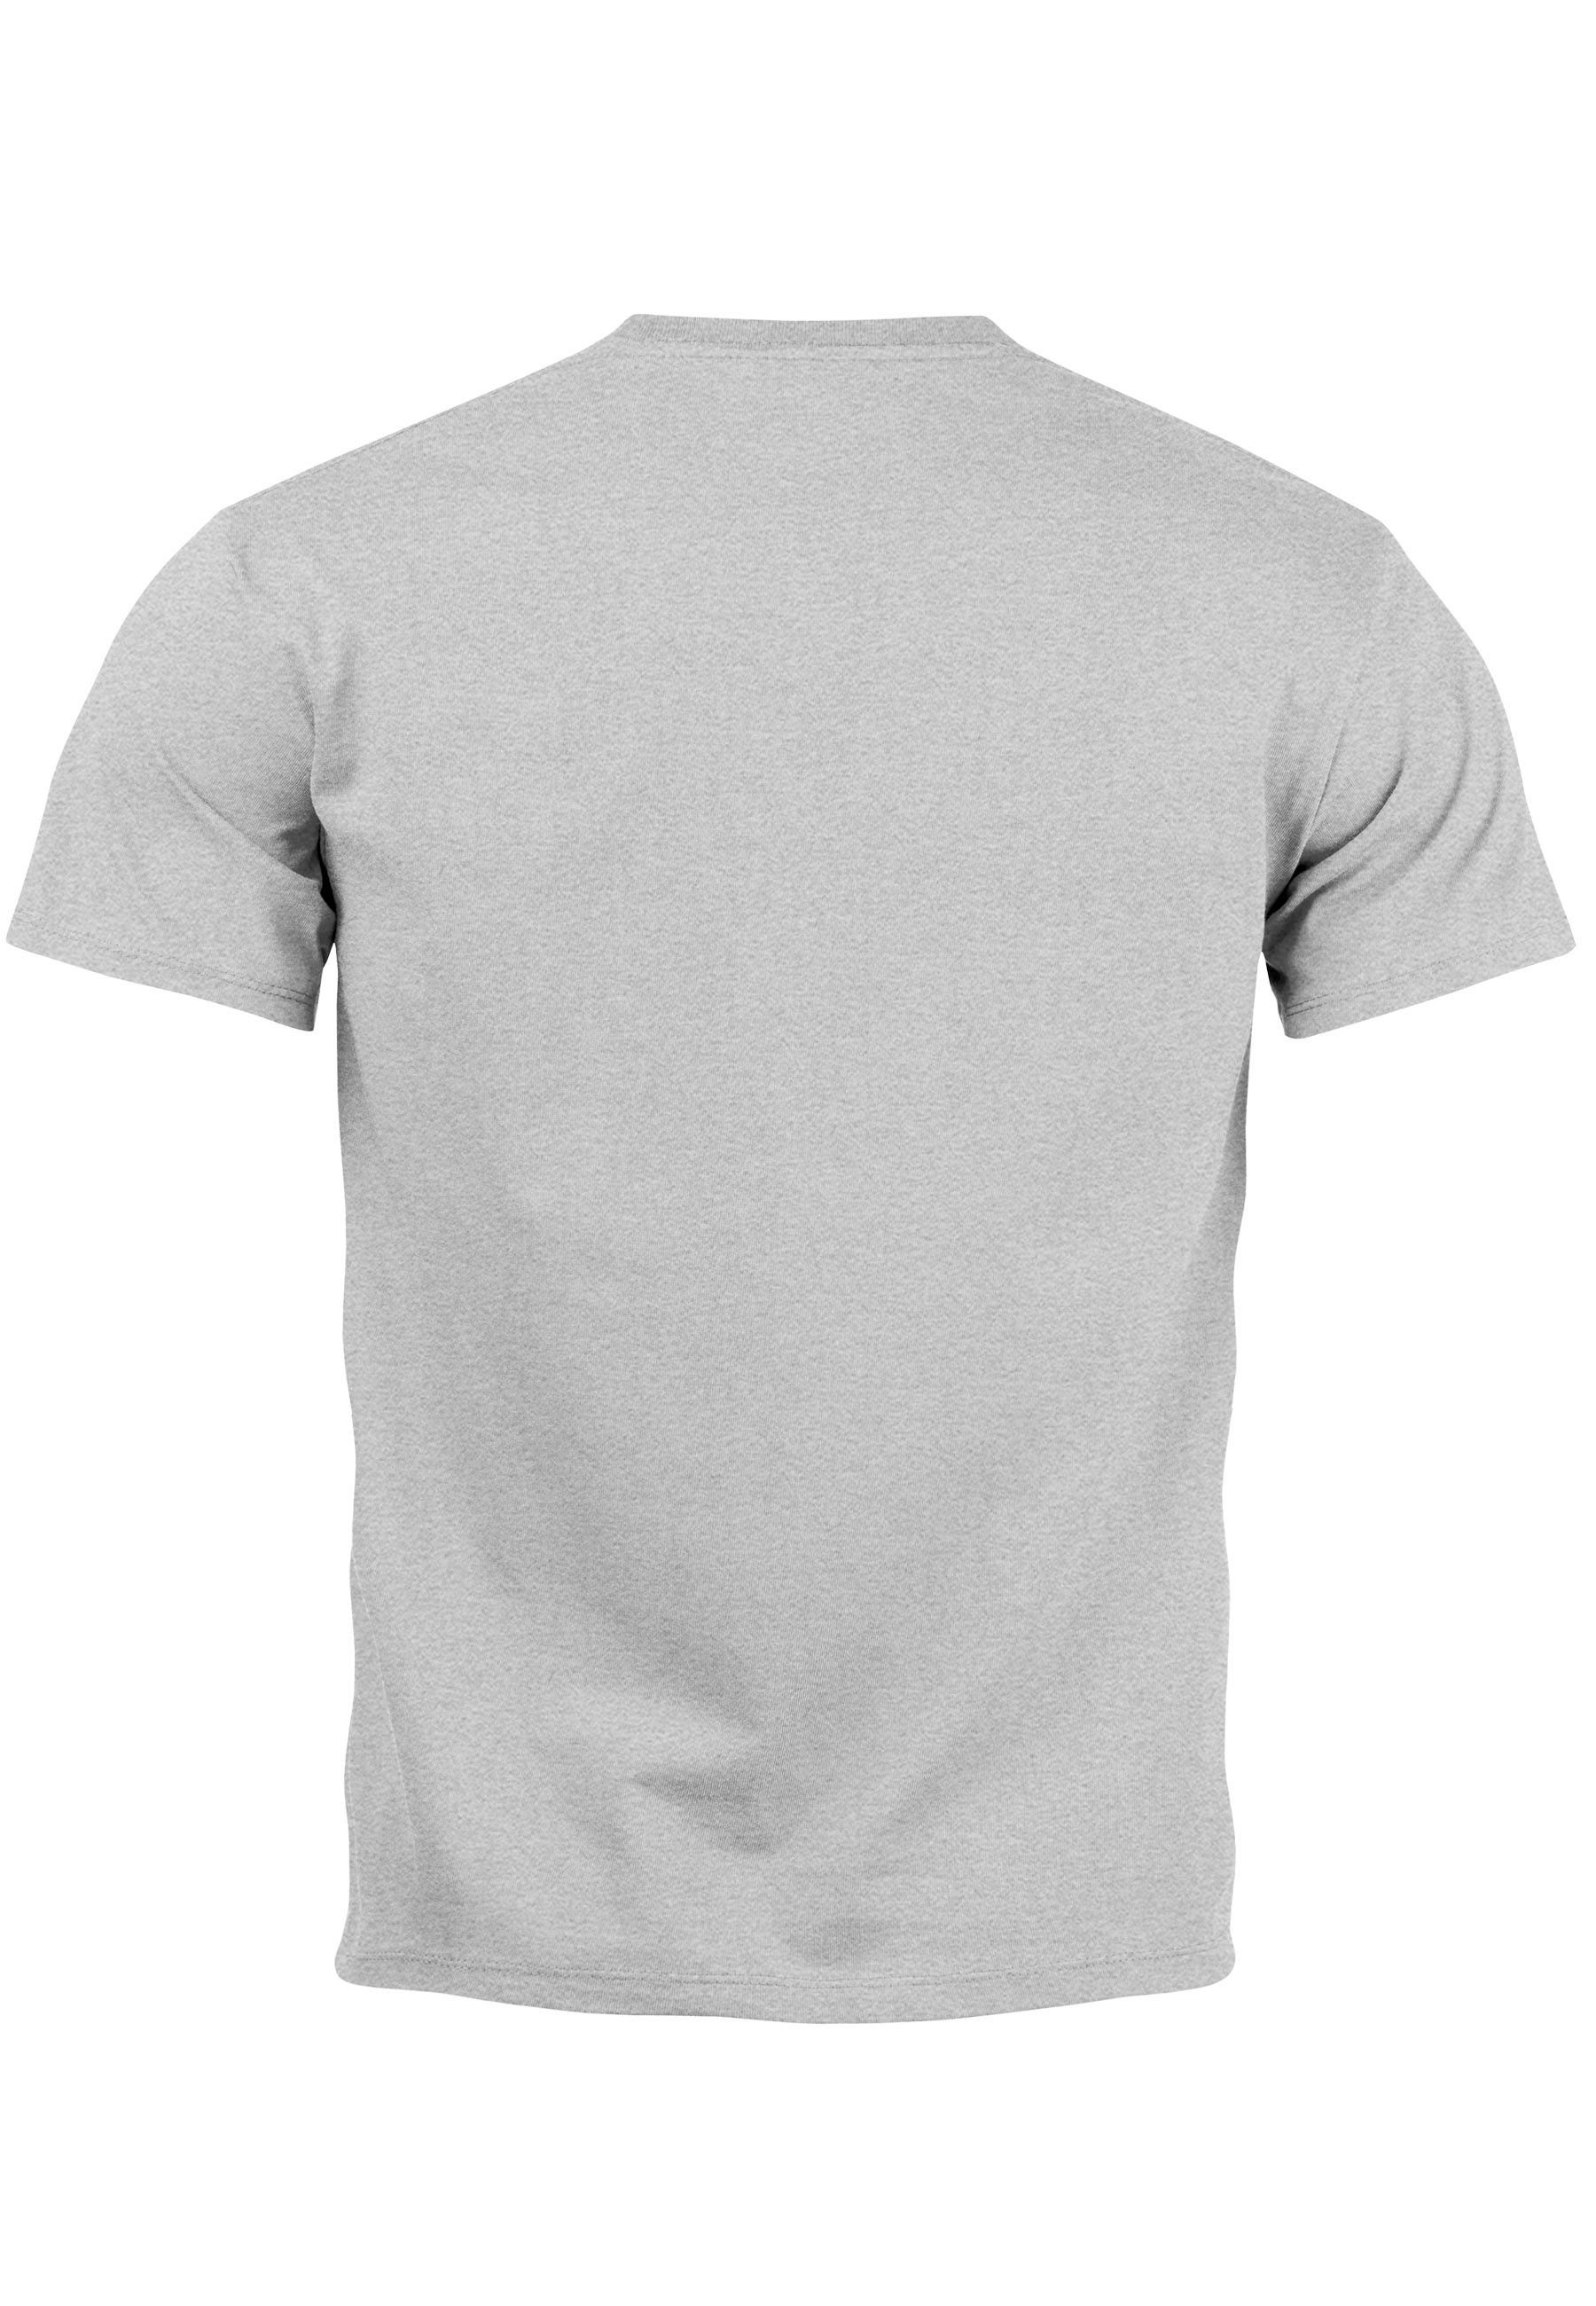 Sommer Teachwear Neverless Paradise Unlimited grau Print-Shirt mit Aufdruck Print Fash Herren Motiv T-Shirt